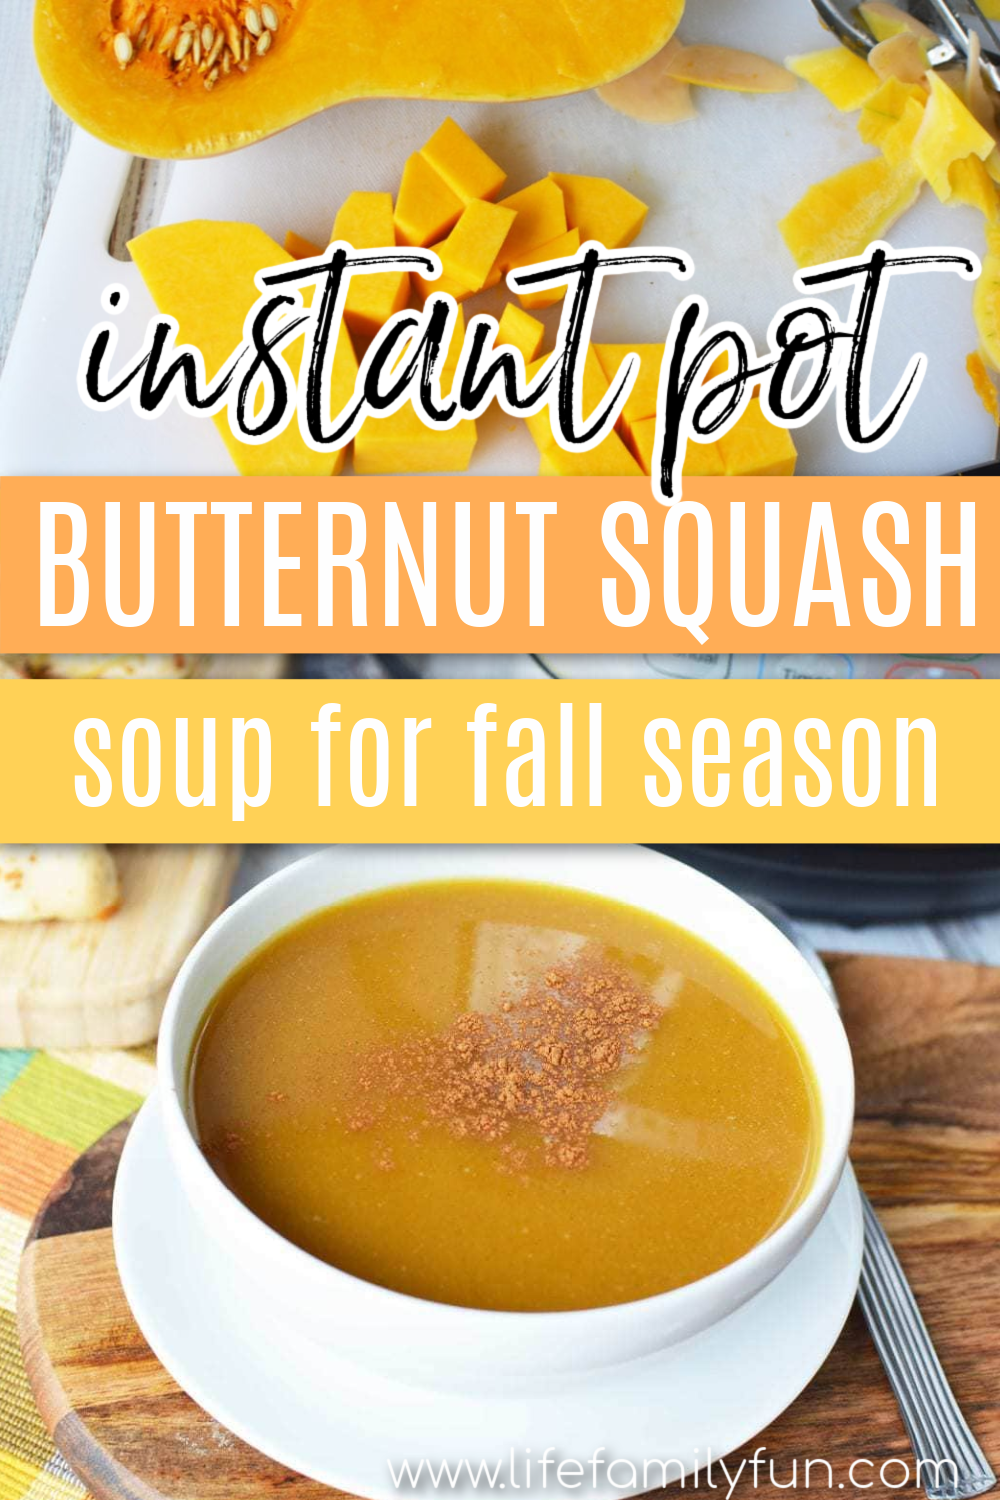 ipbutternut-squash-soup